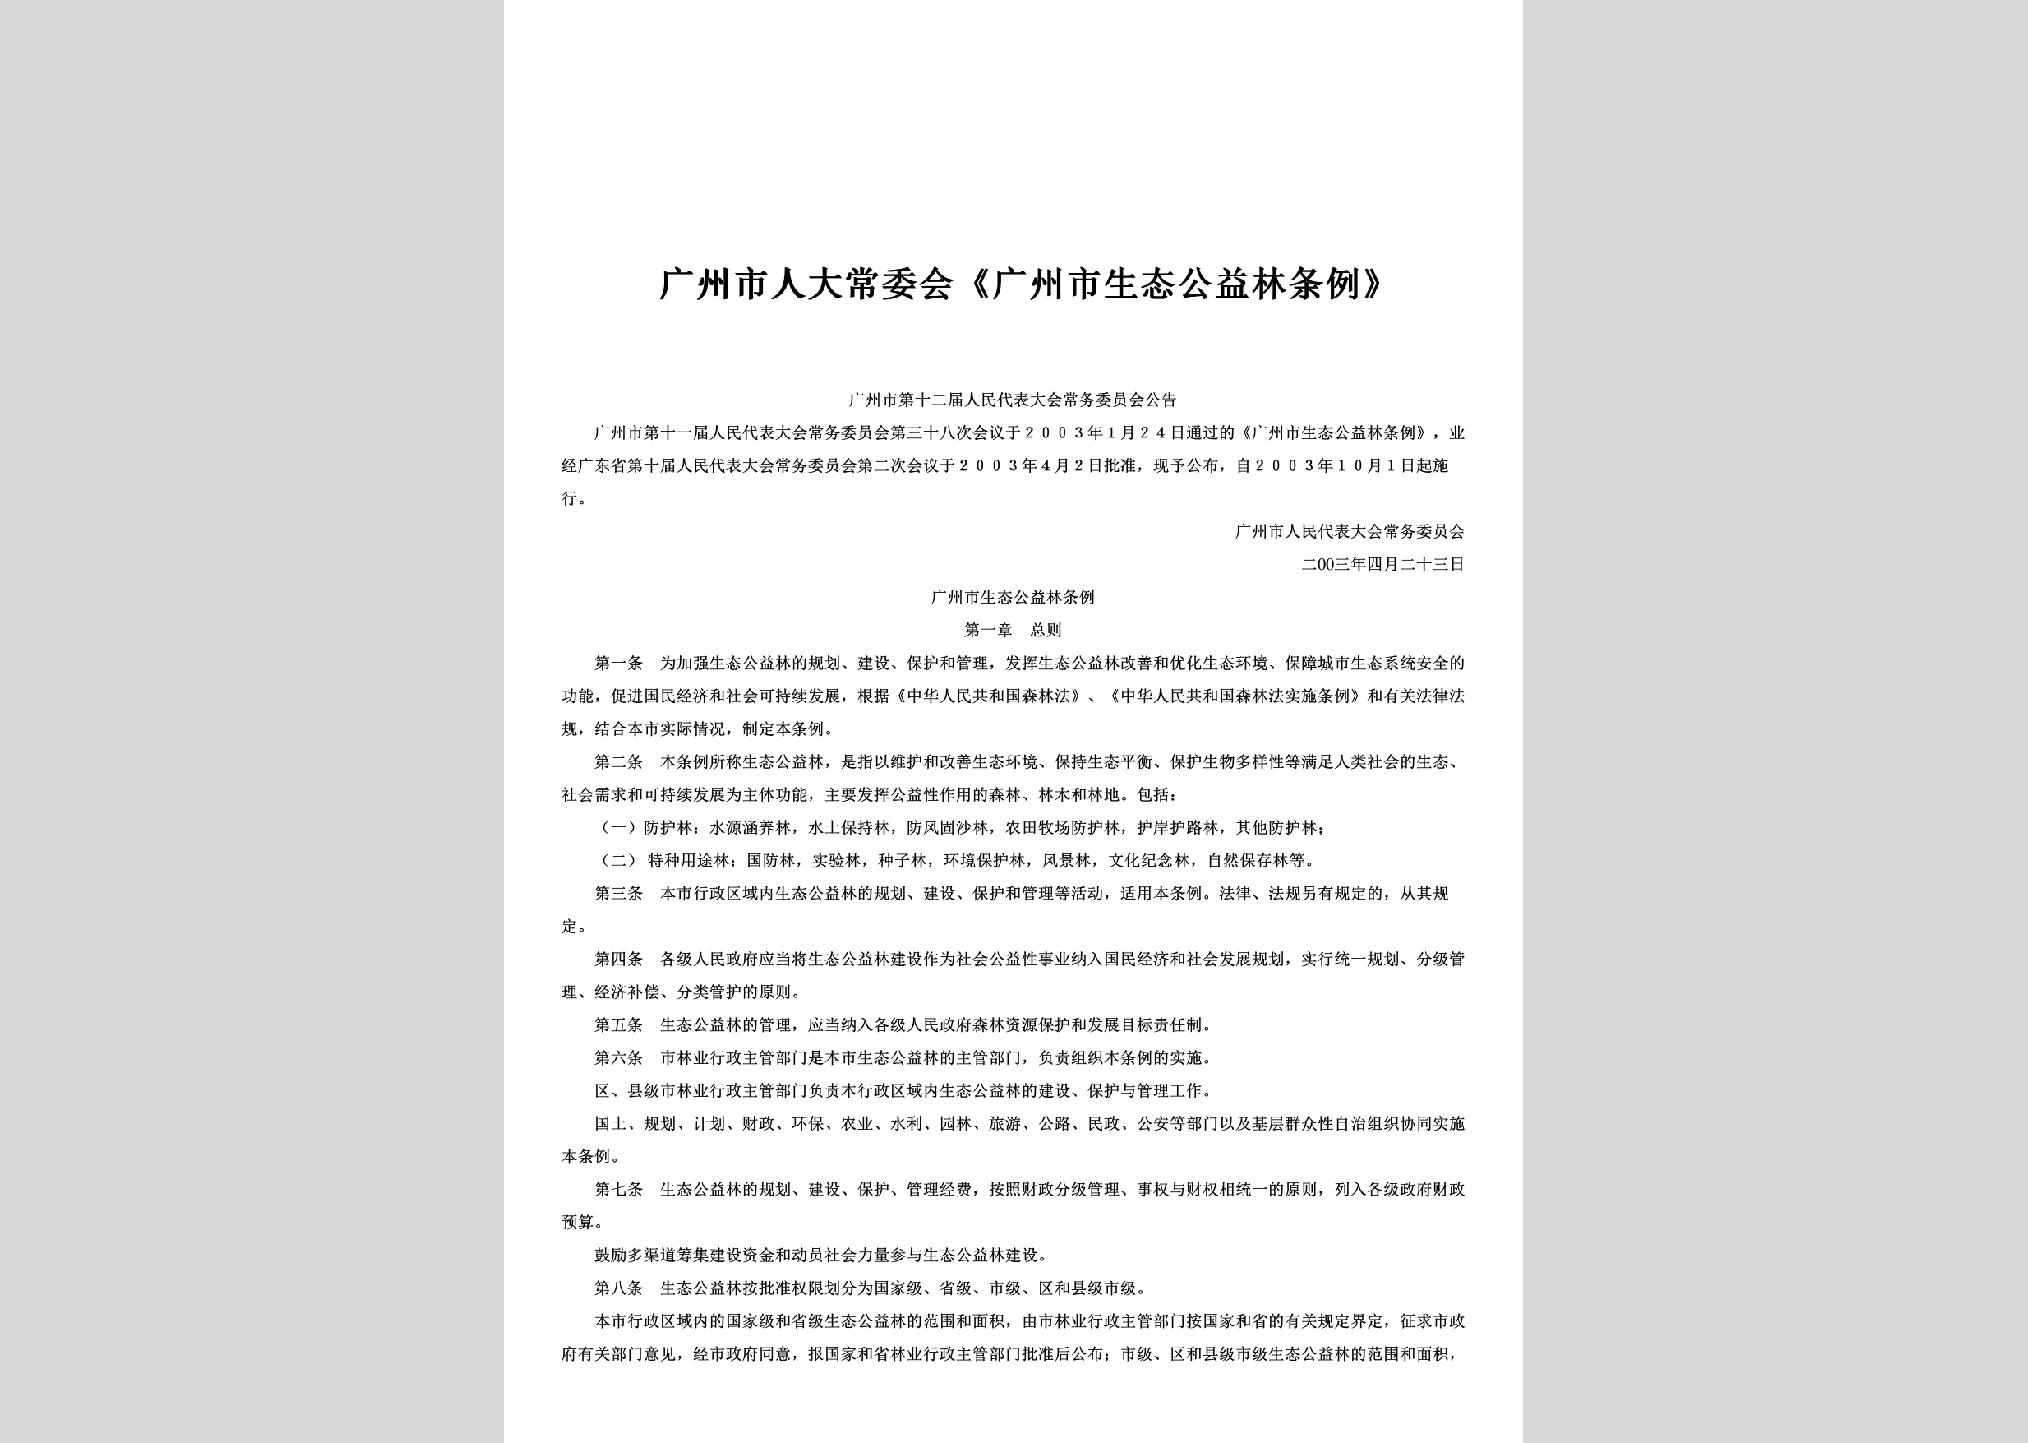 GD-STGYLTL-2003：《广州市生态公益林条例》